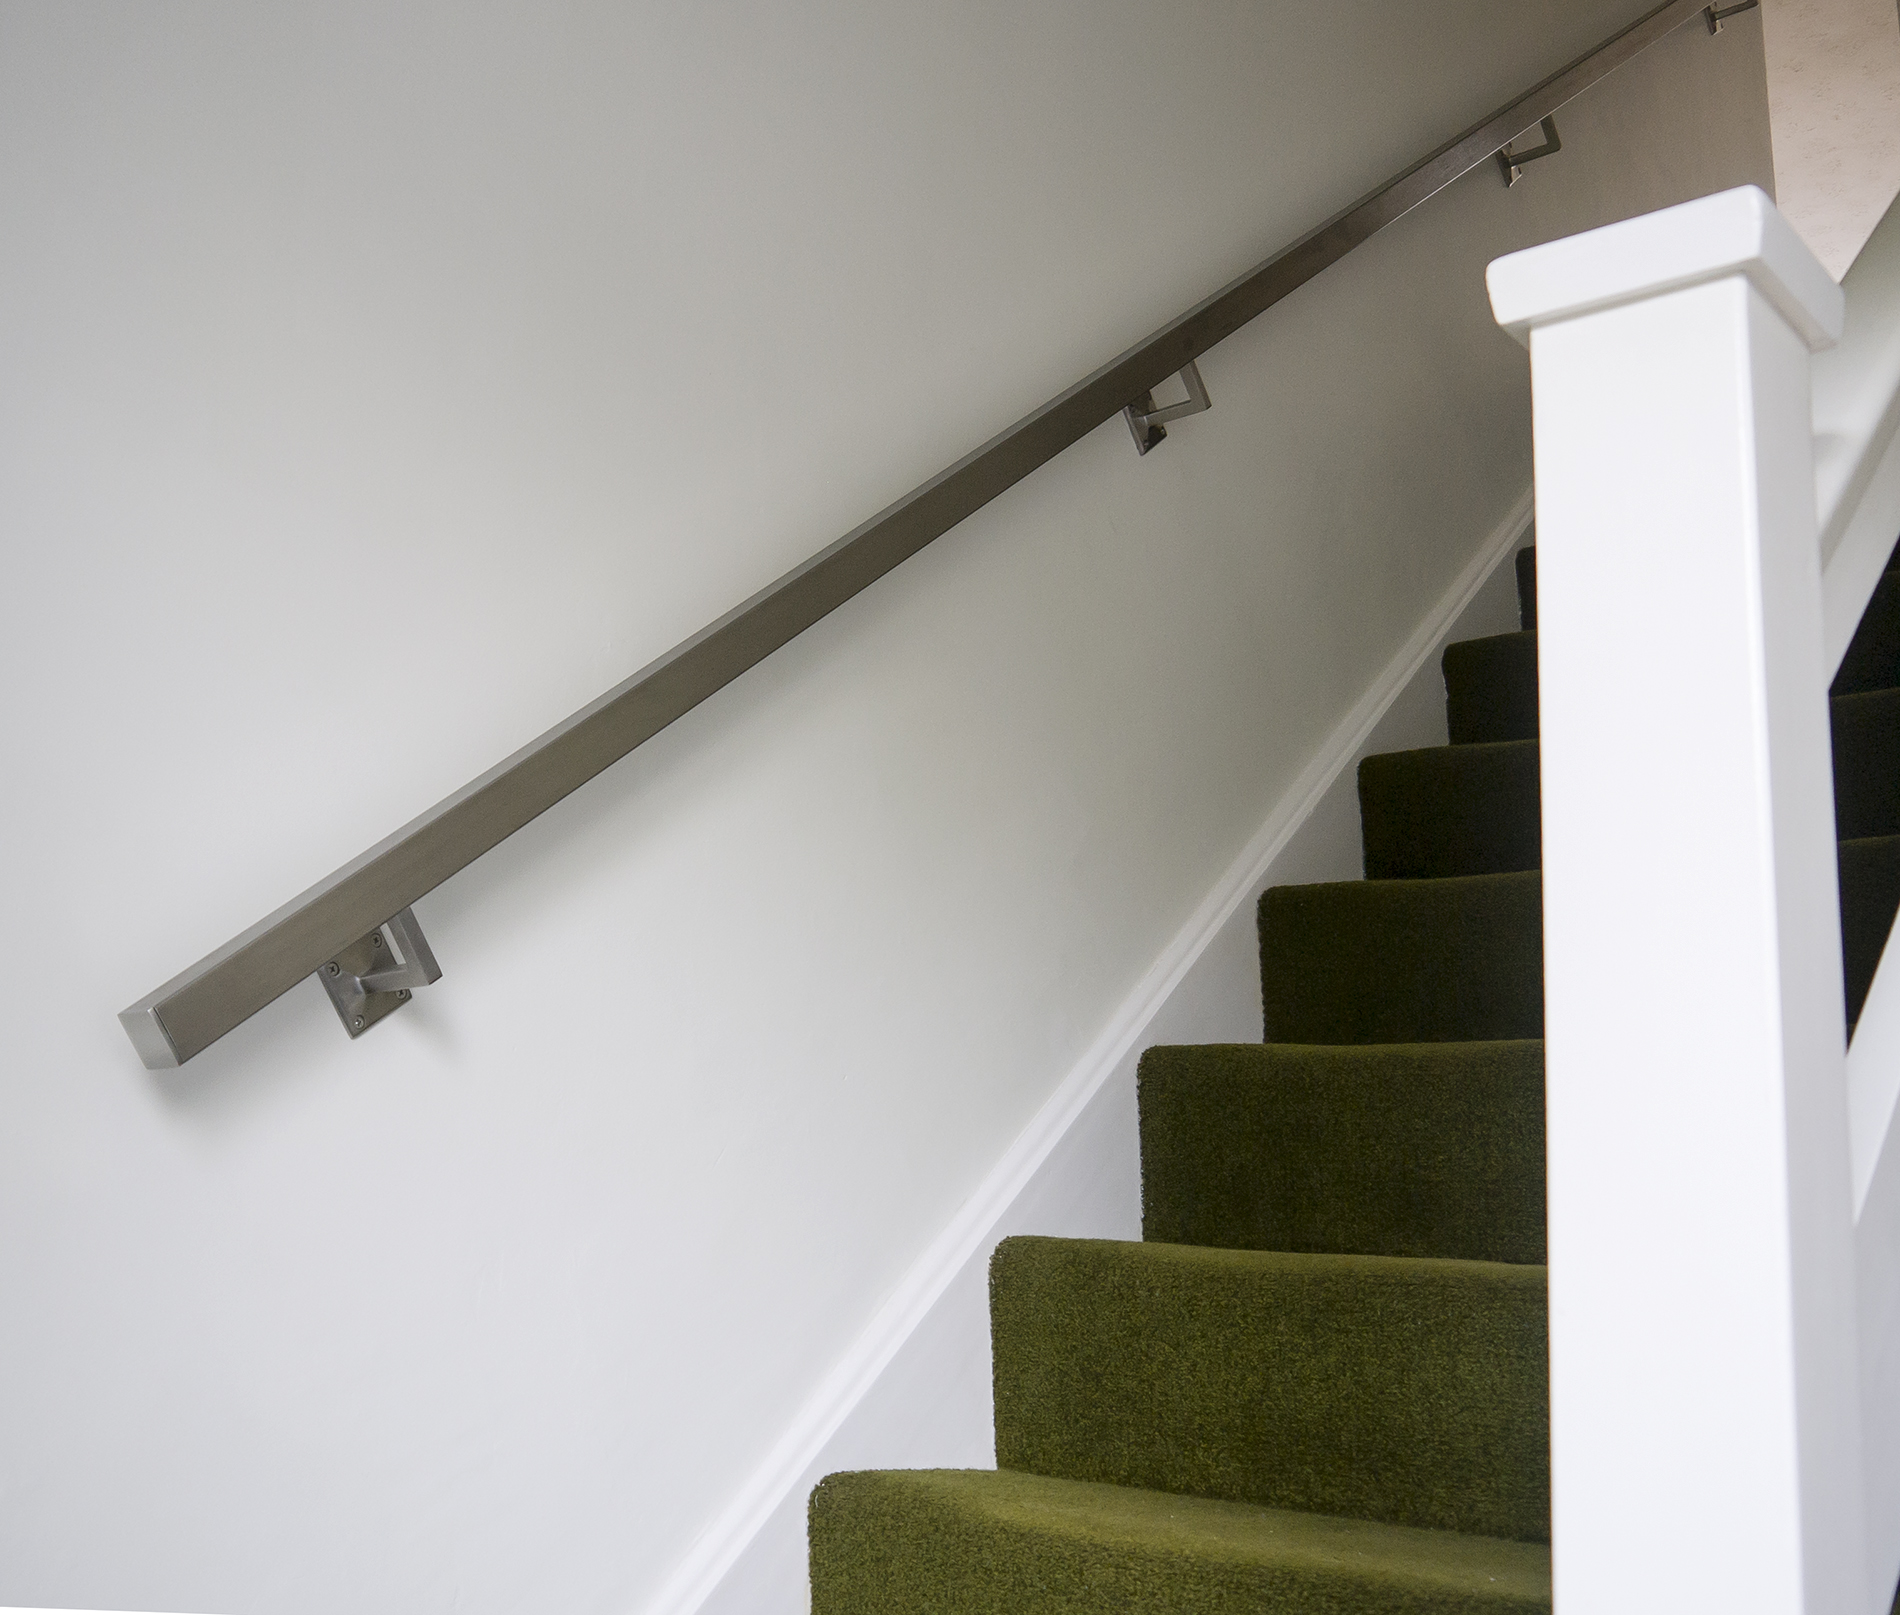 Brushed Stainless Steel Metal Banister Stair Handrail: Pre ...